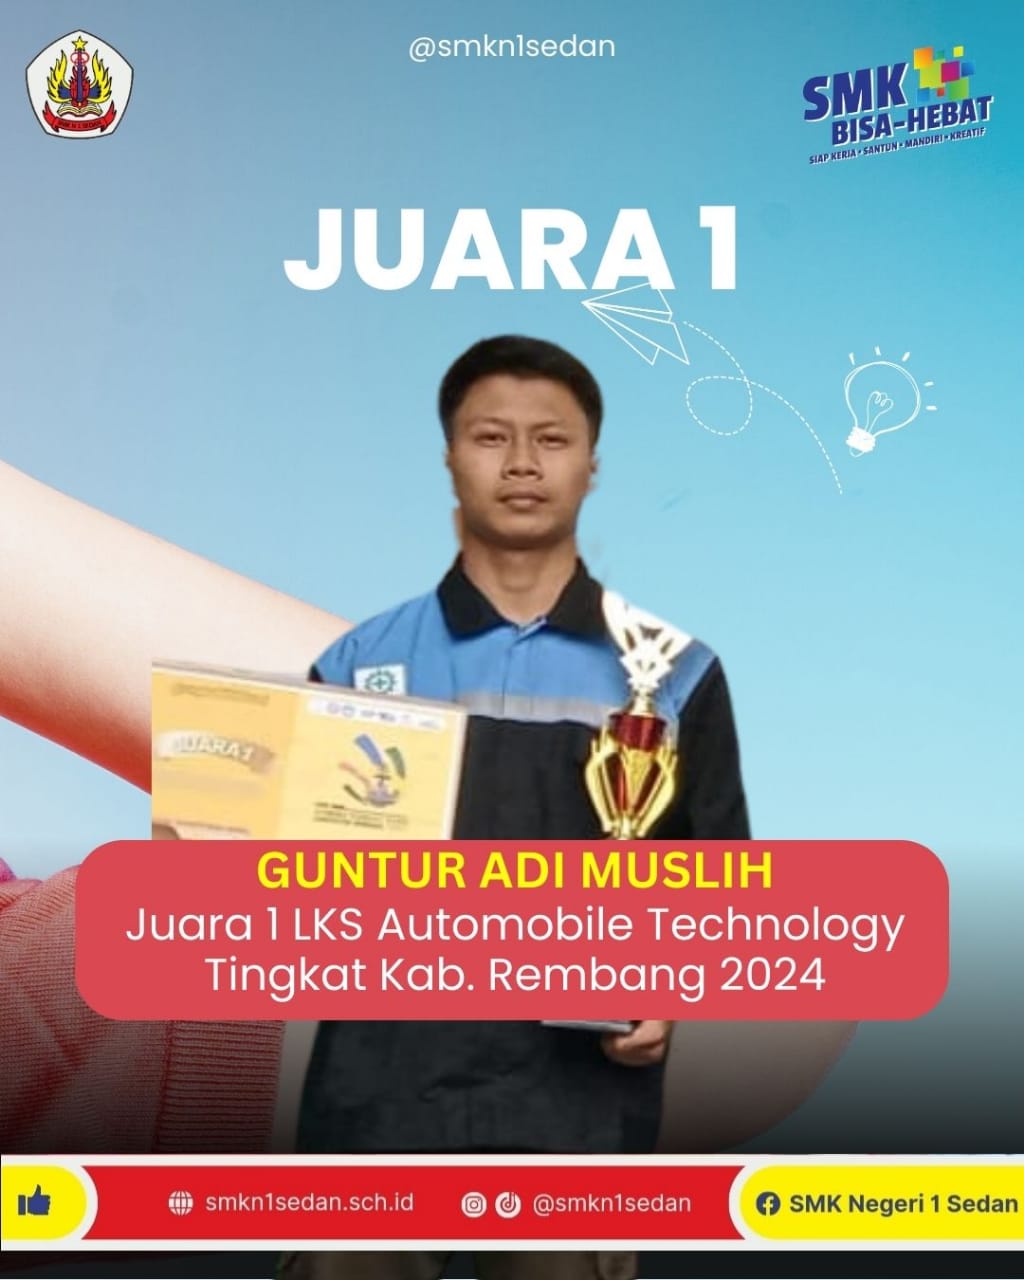 Juara 1 LKS Automobile Technology